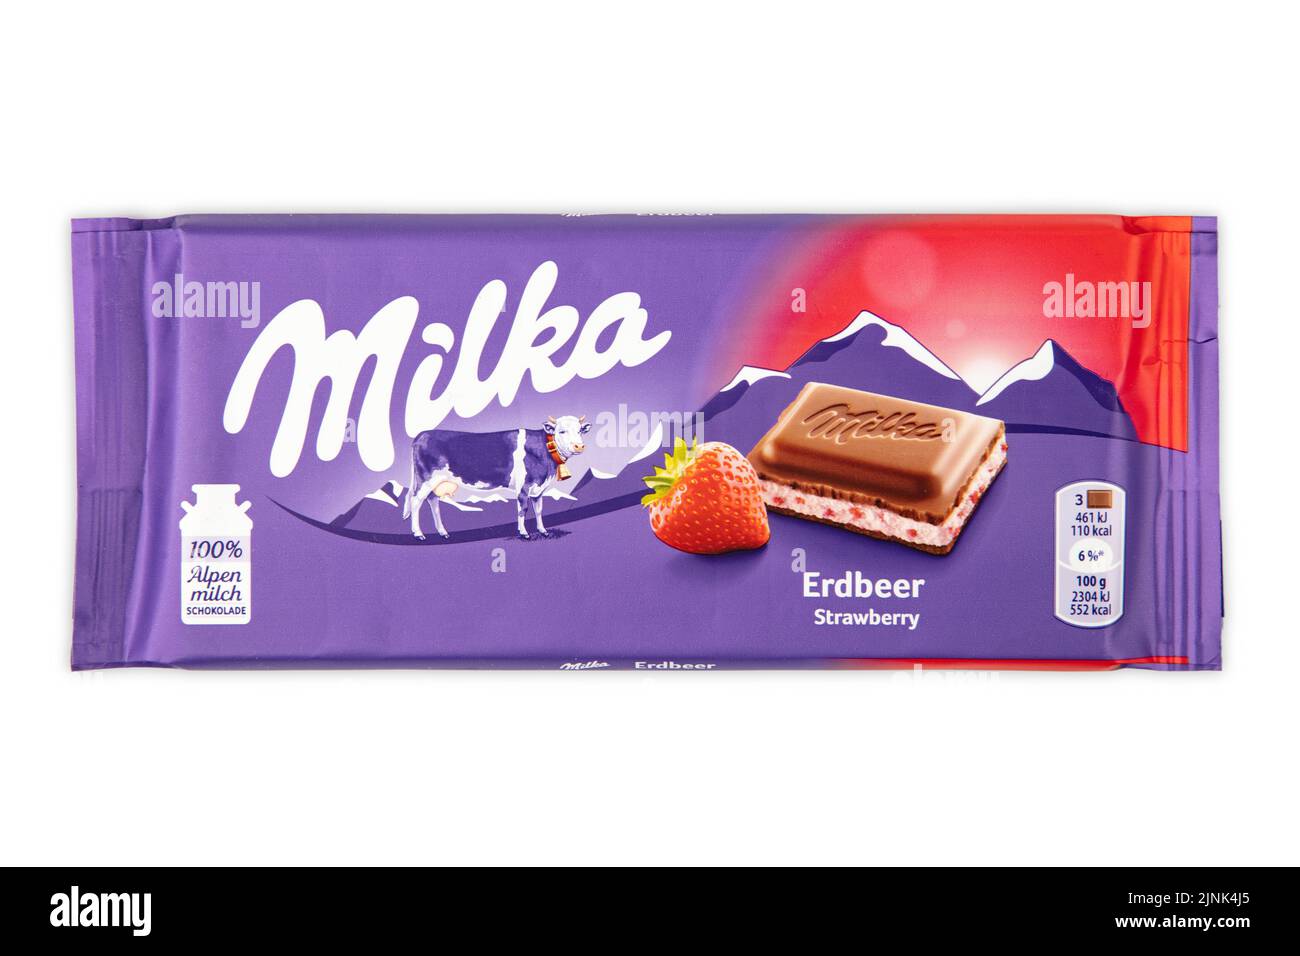 White chocolate bar Milka, tableta de ciocolata alba 100g